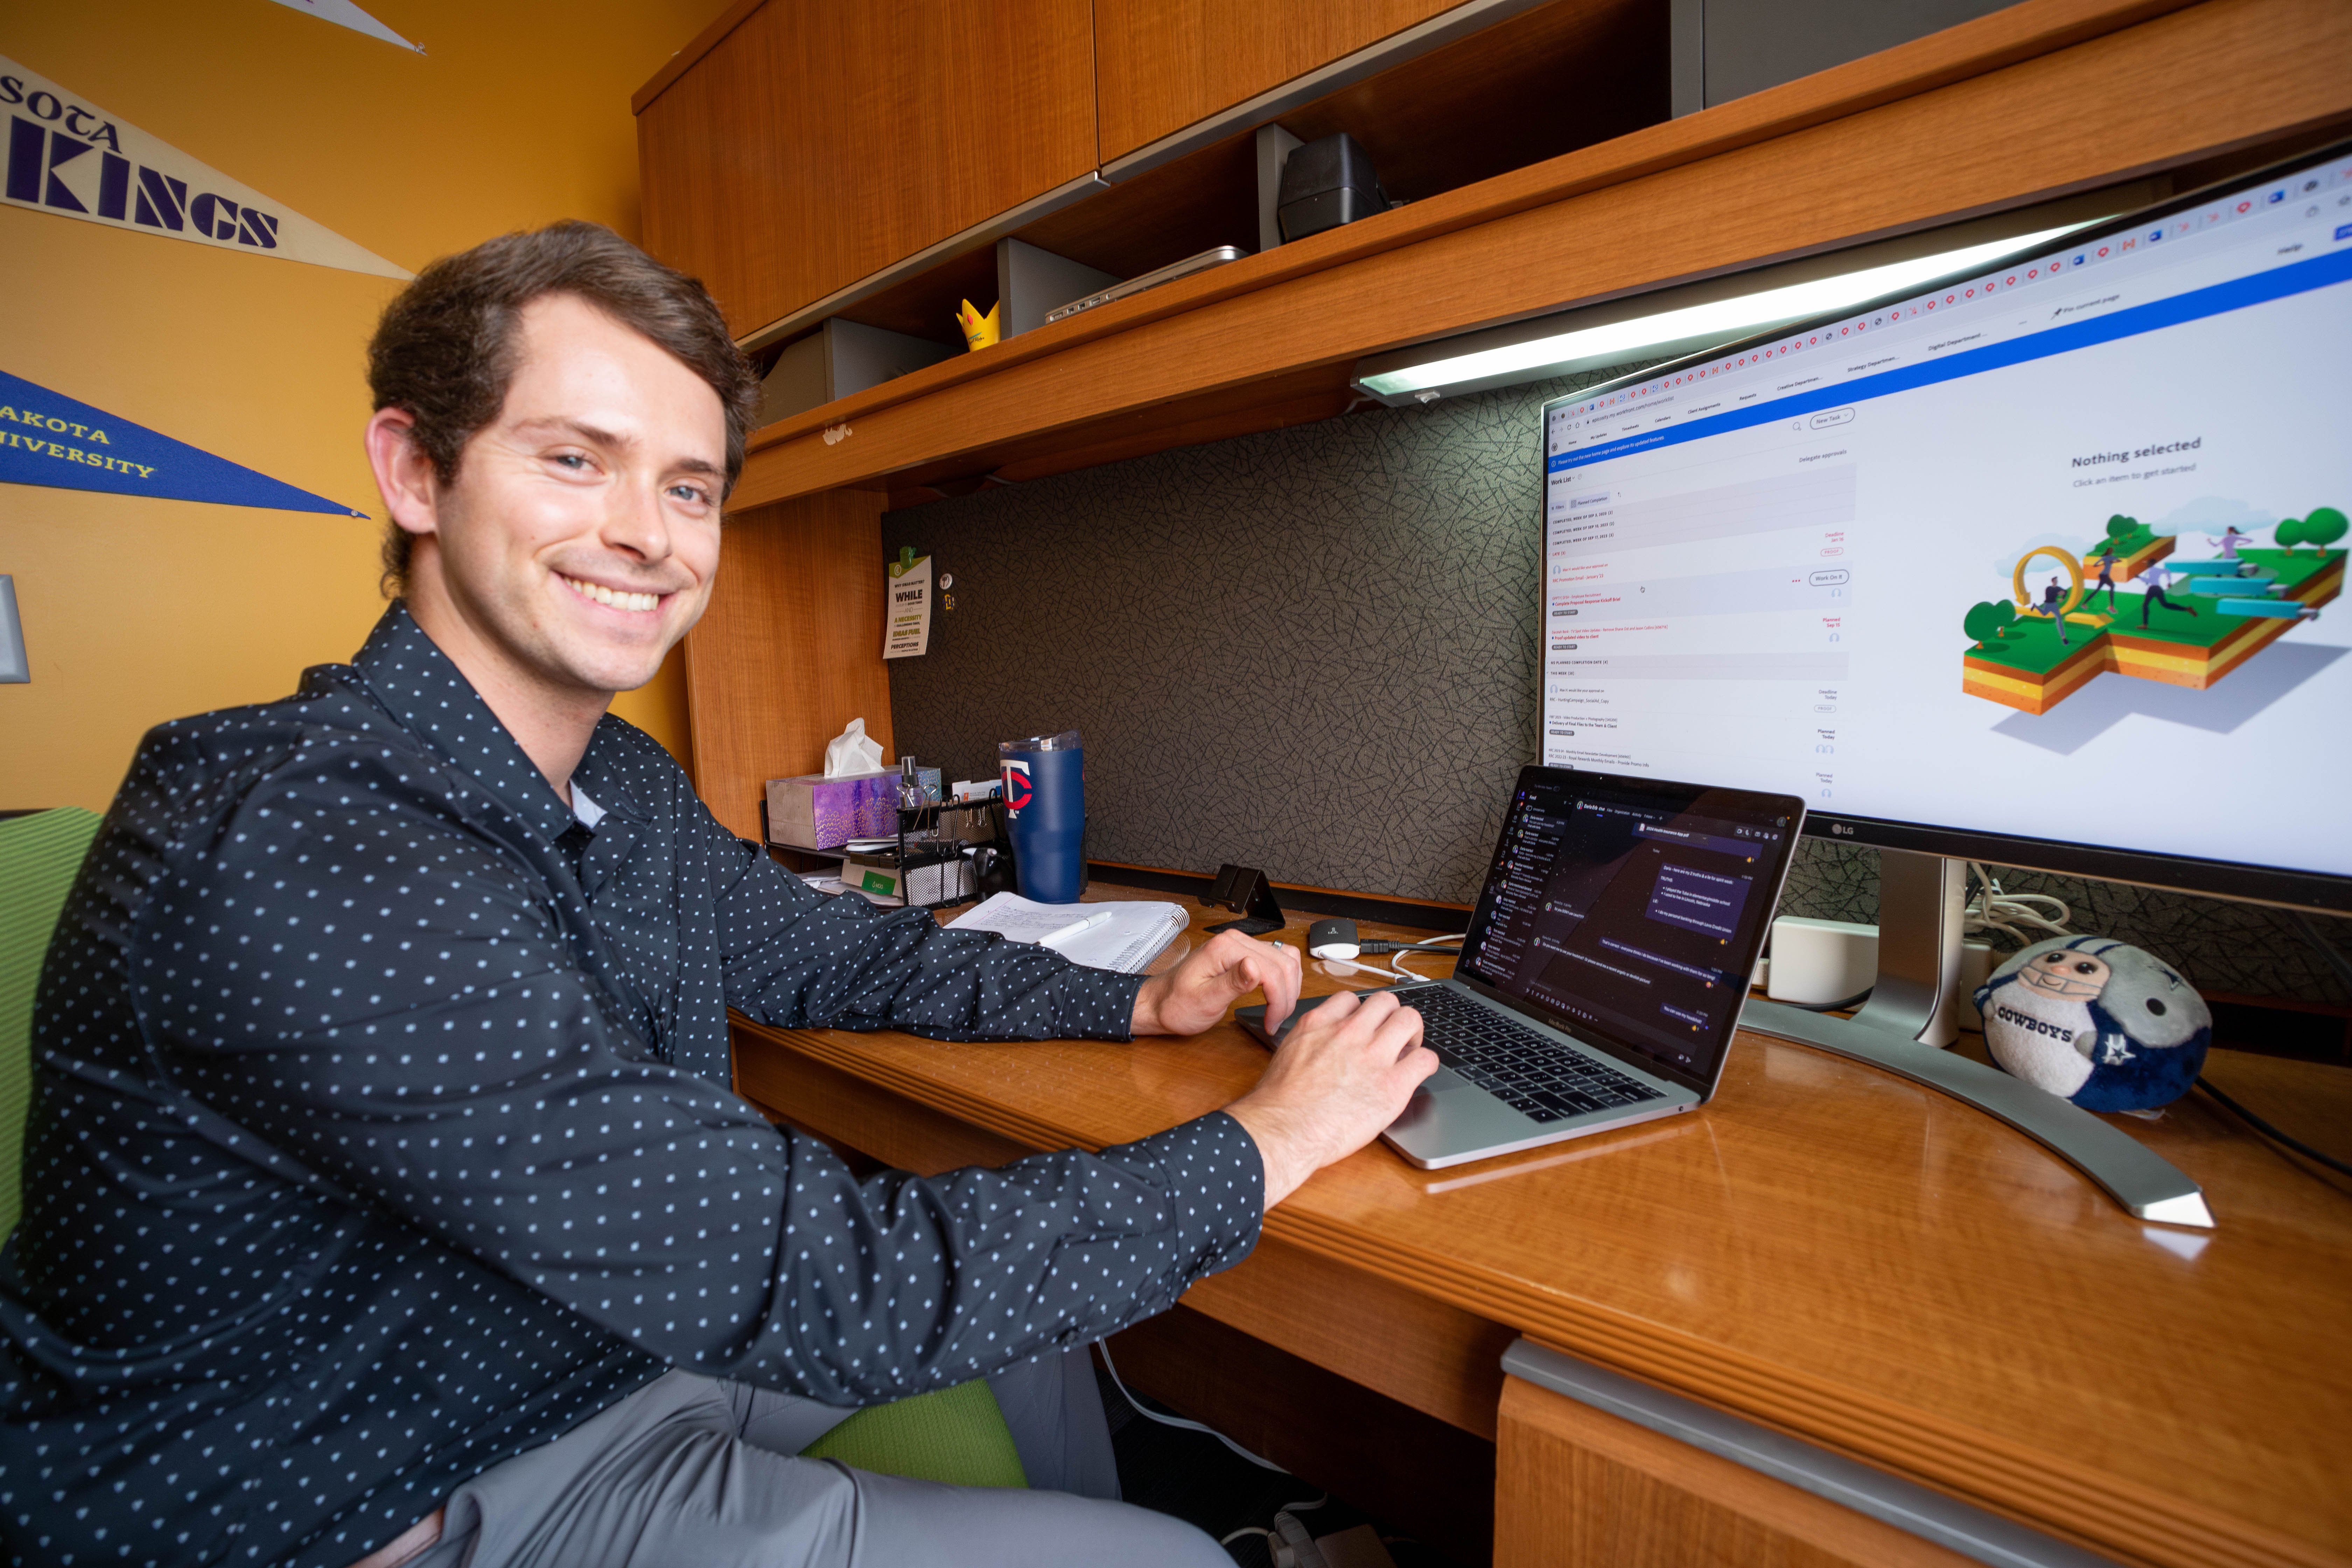 Account executive, Seth Bjordal, smiling at his desk